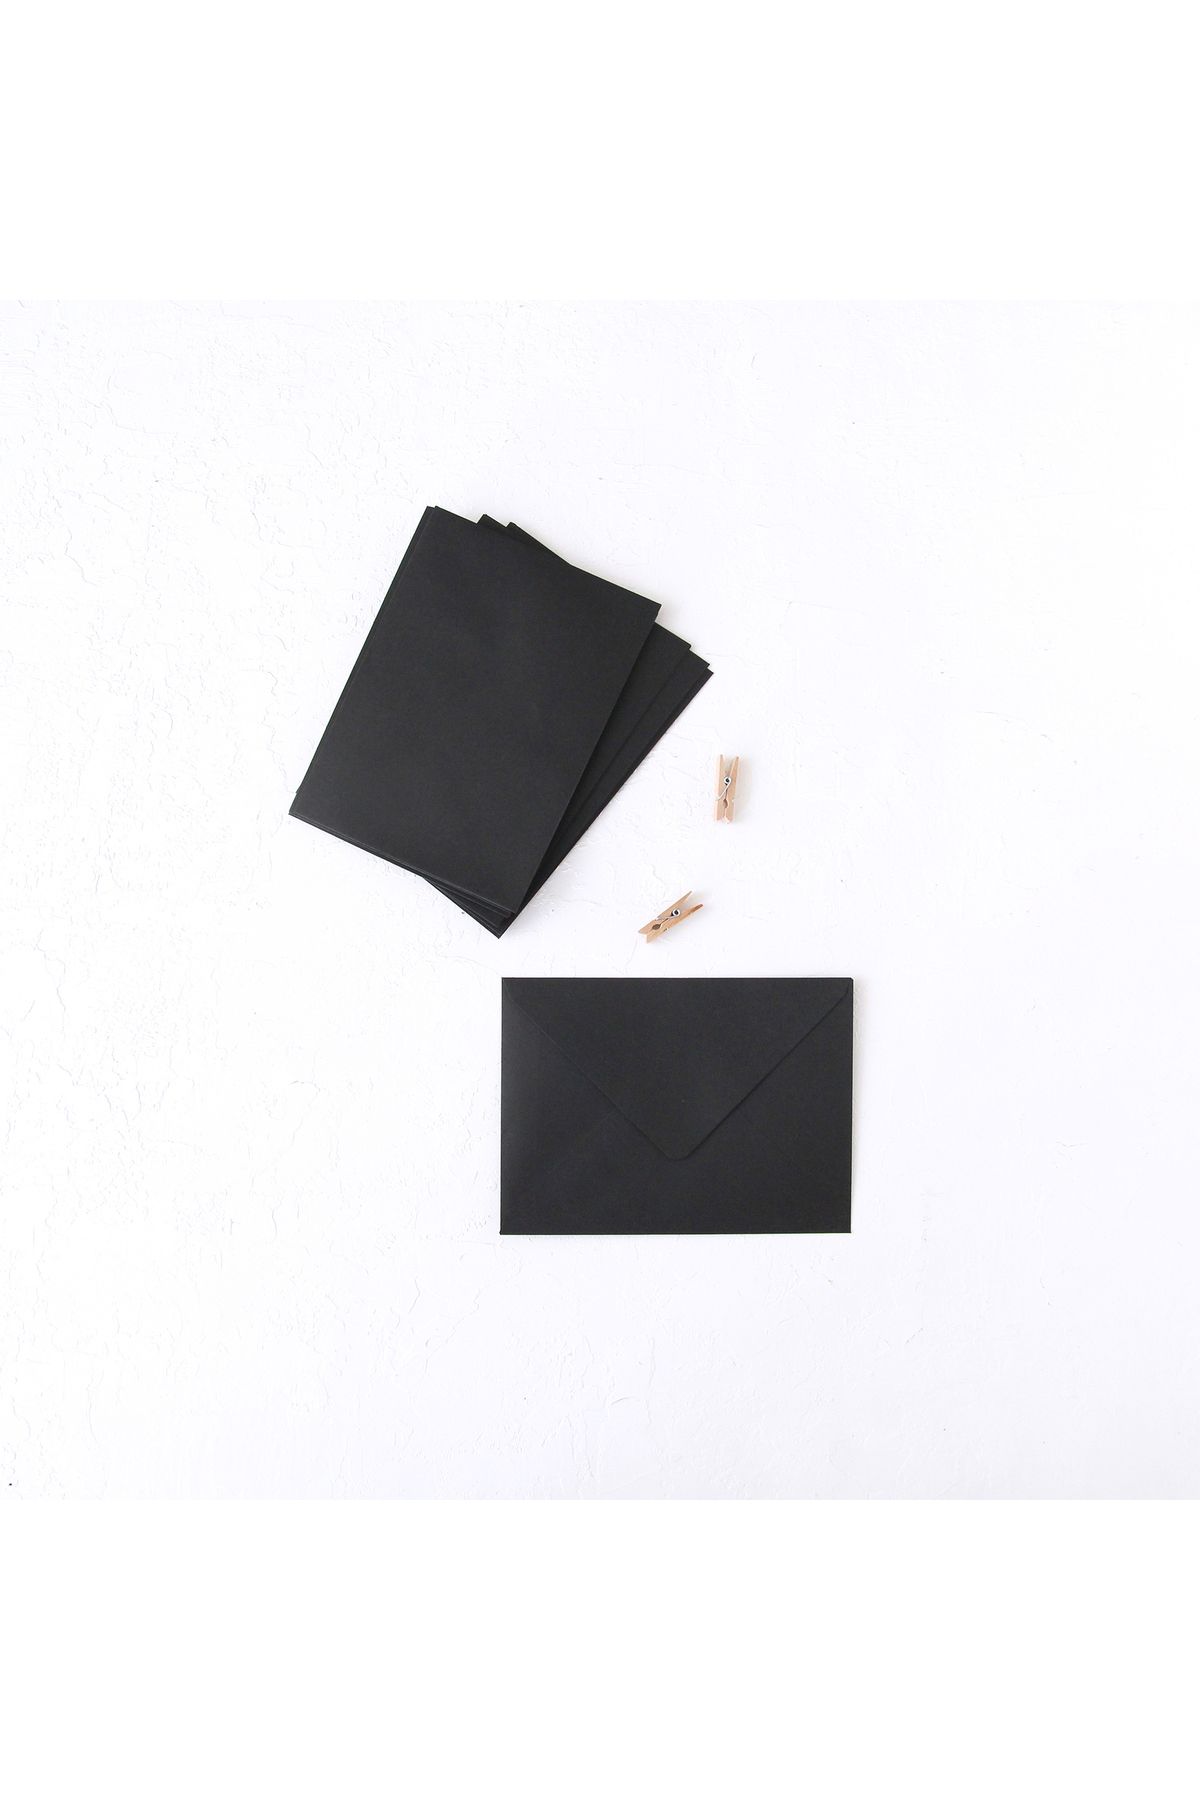 Bimotif Siyah Standart Zarf, 13x18 Cm 10 Adet